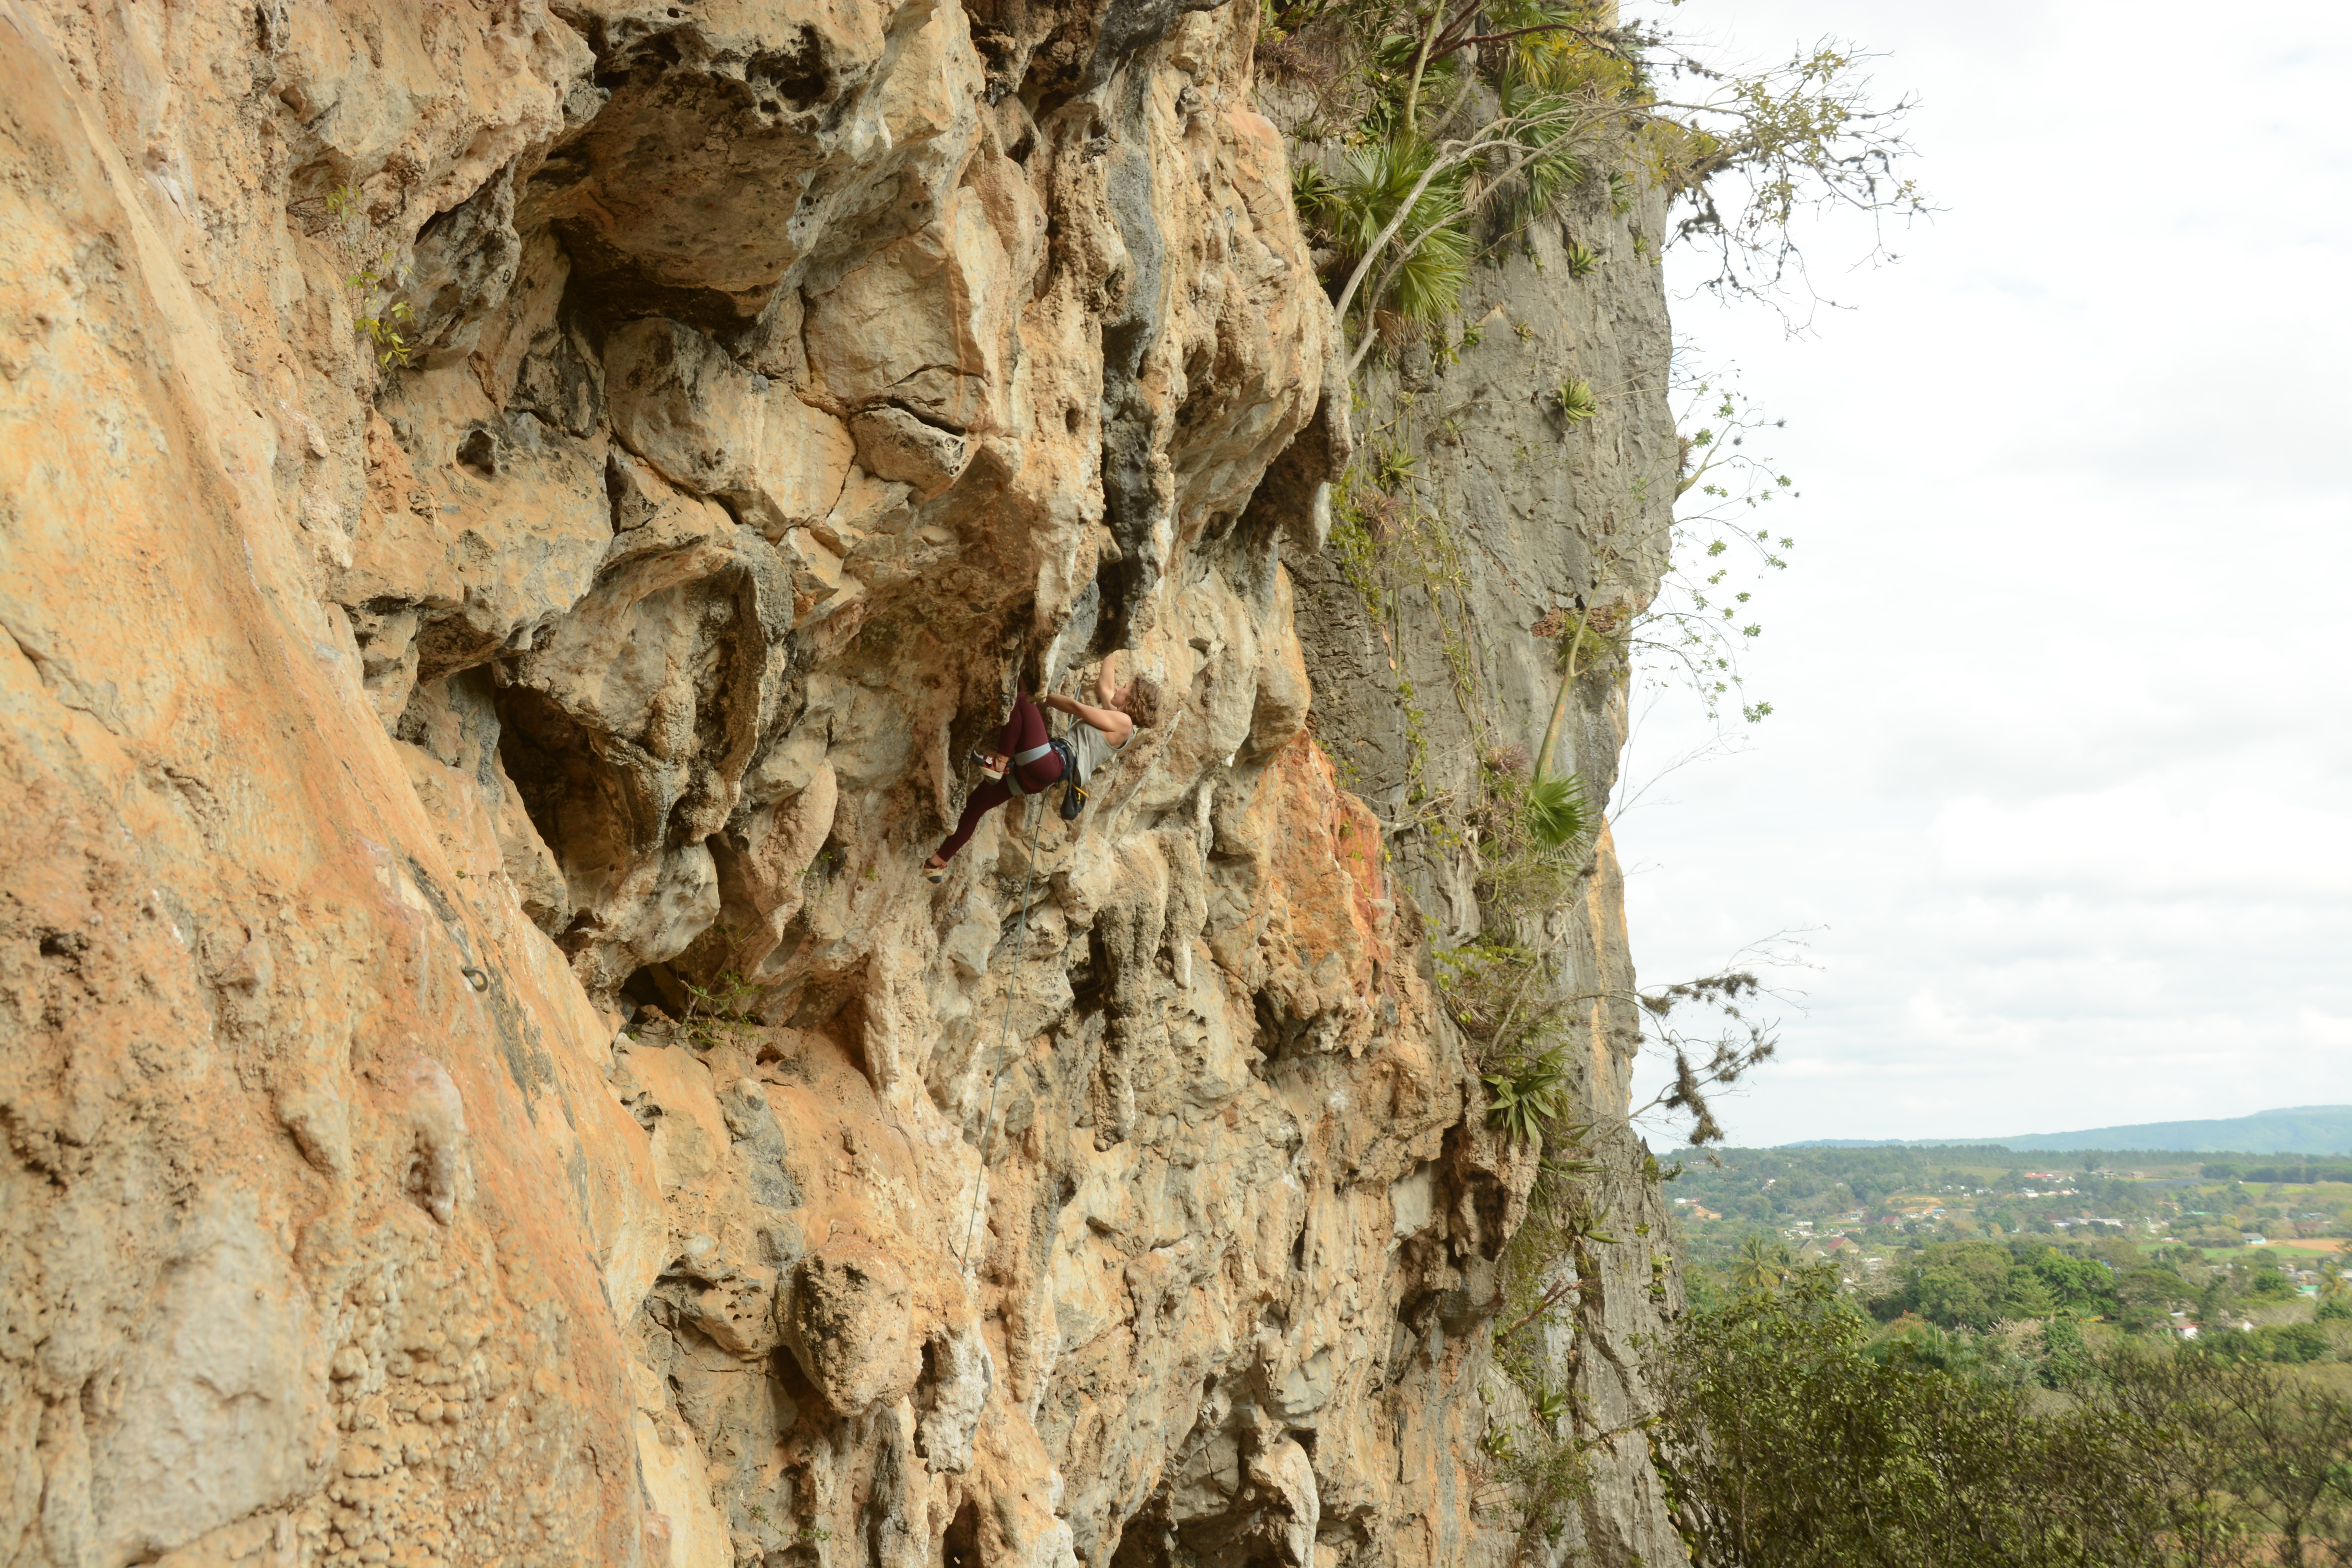 A climber sport climbing in Vinales, Cuba